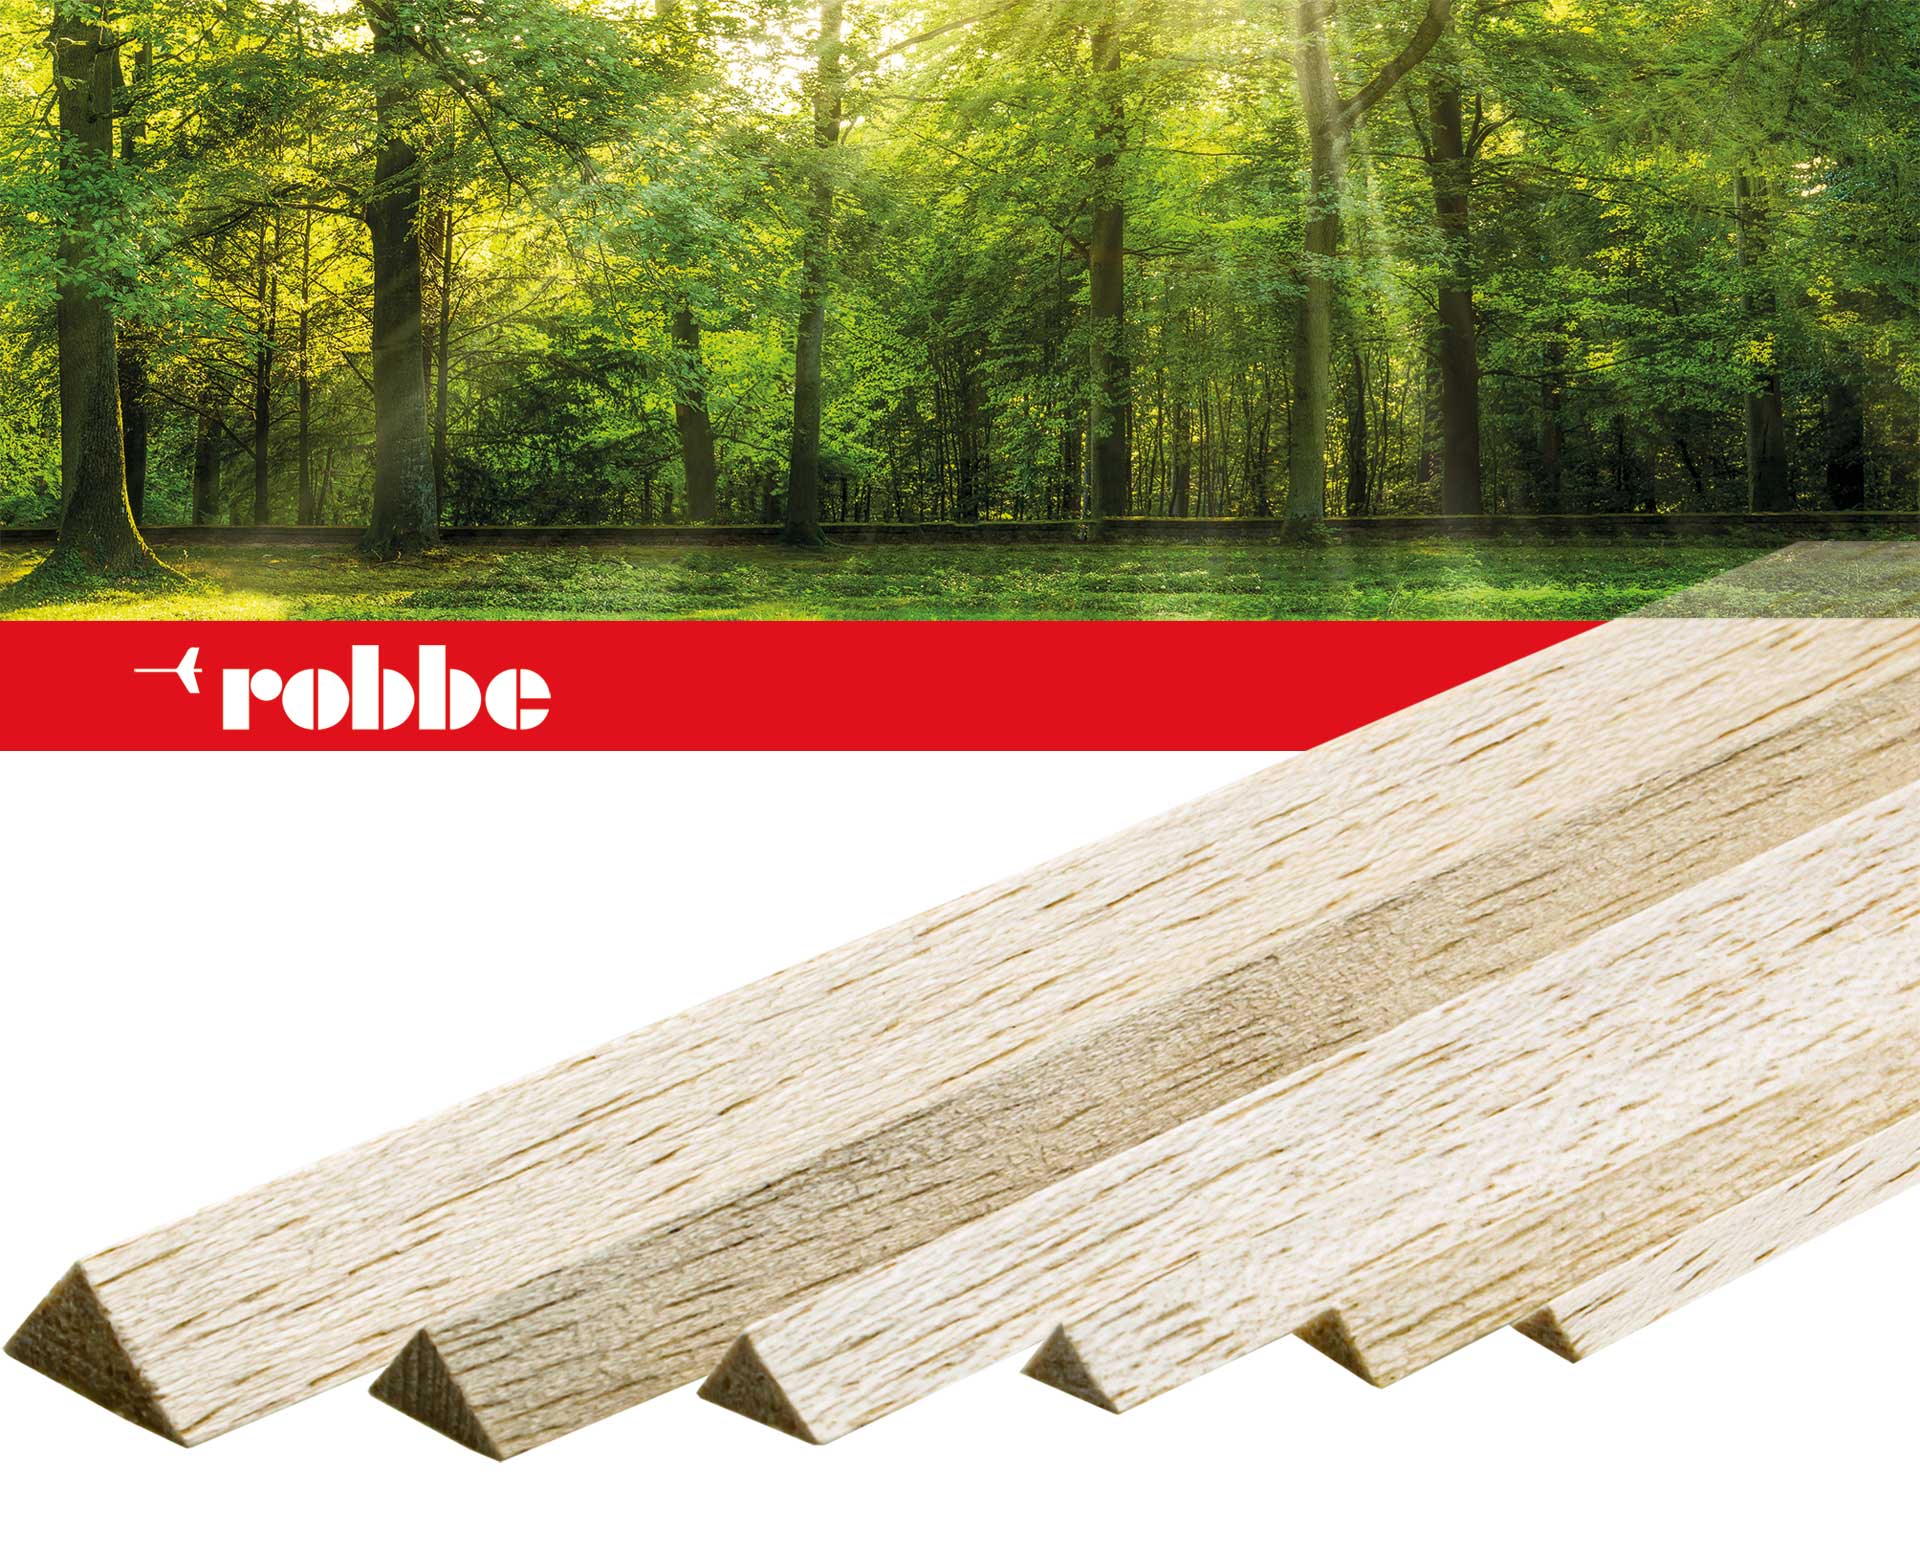 Robbe Modellsport Balsa triangular strip 8x8x1000mm